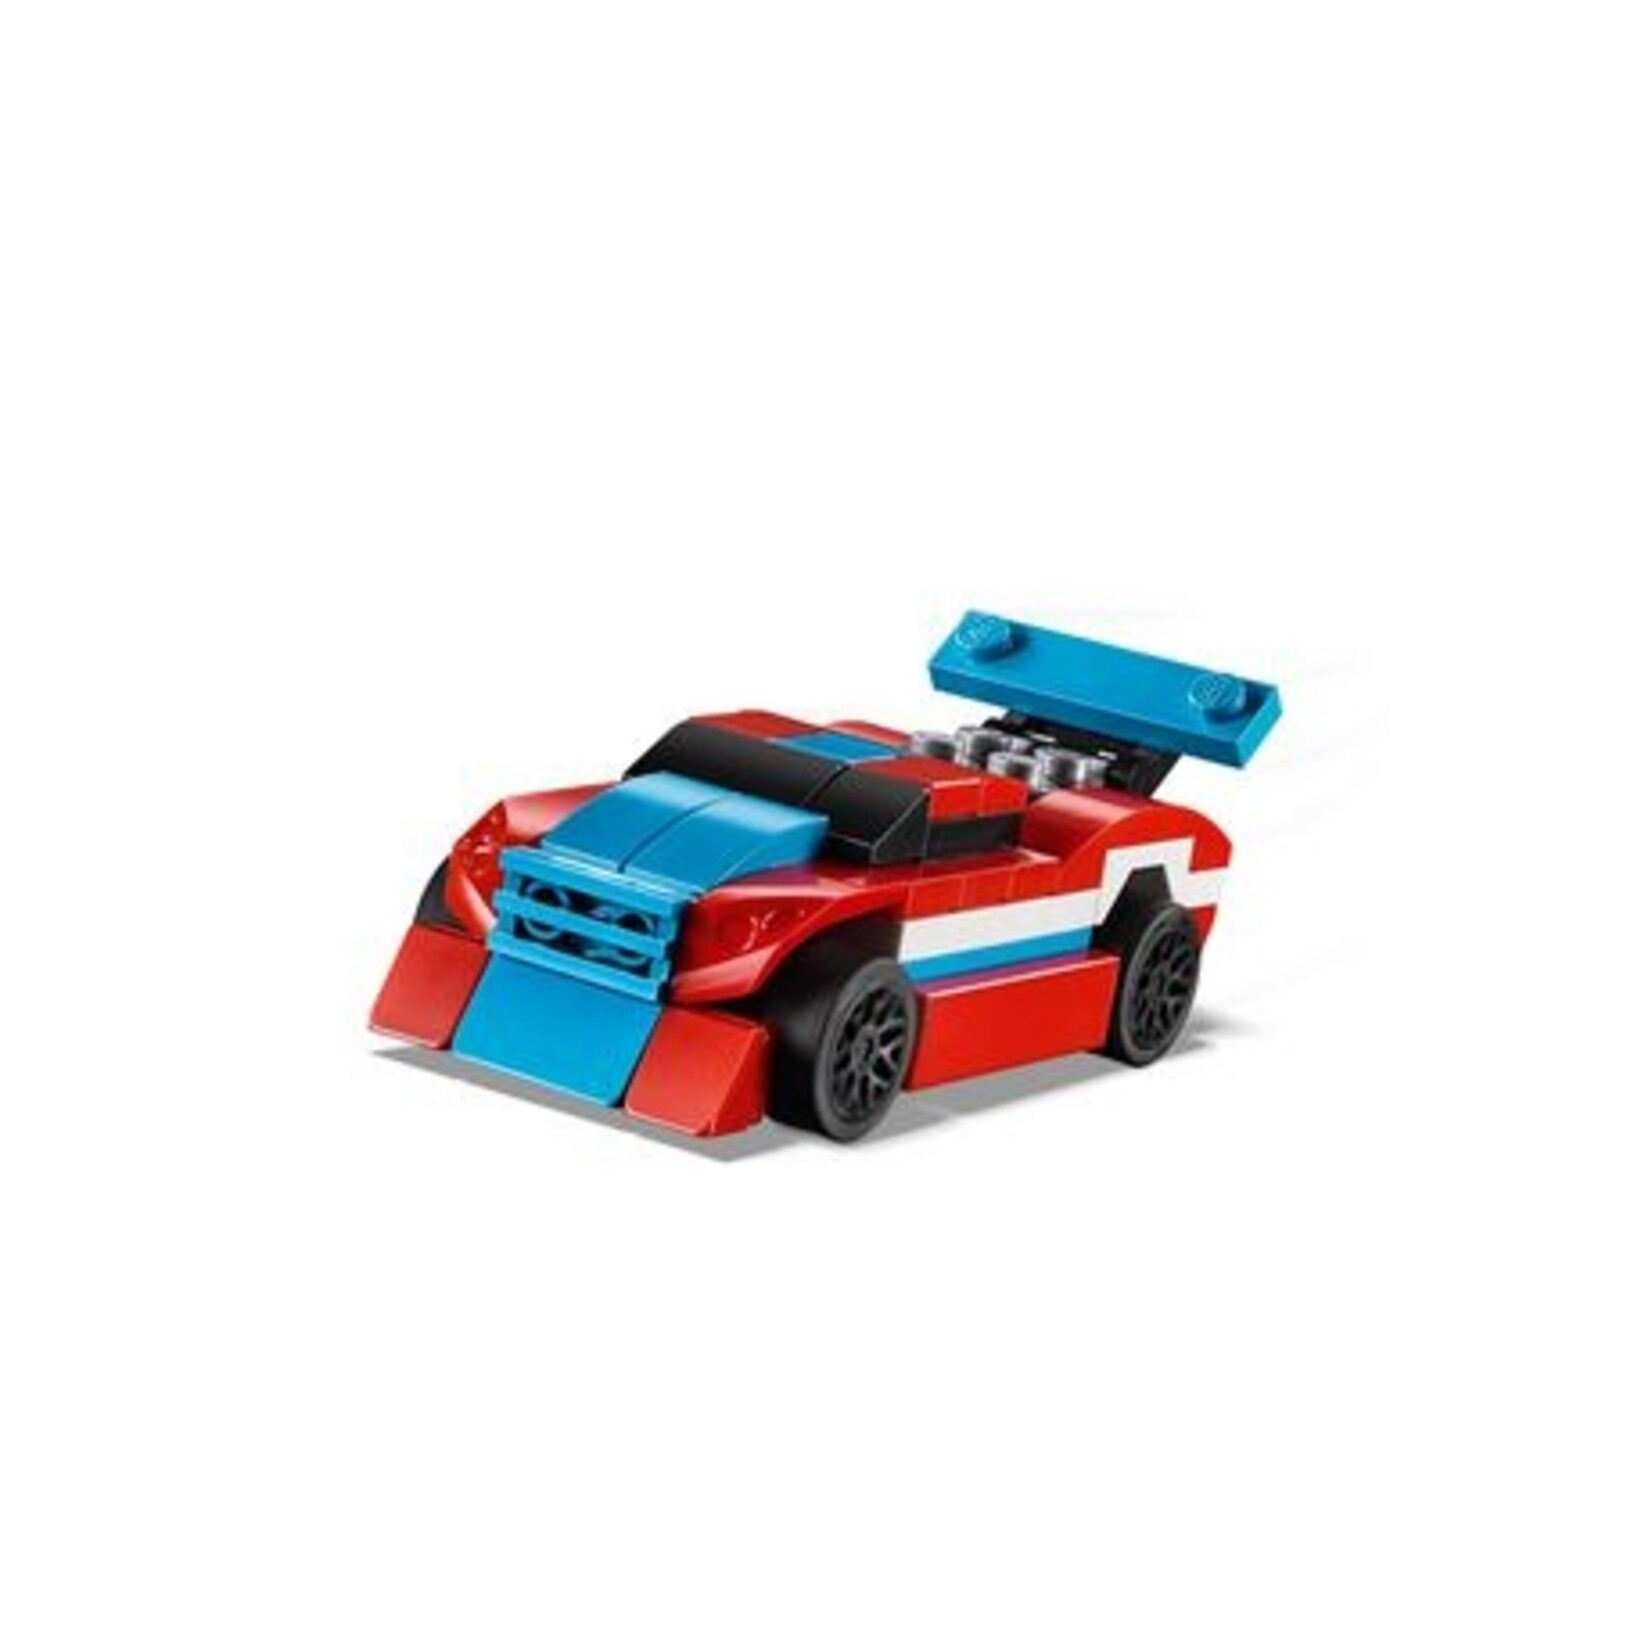 LEGO Racewagen 30572